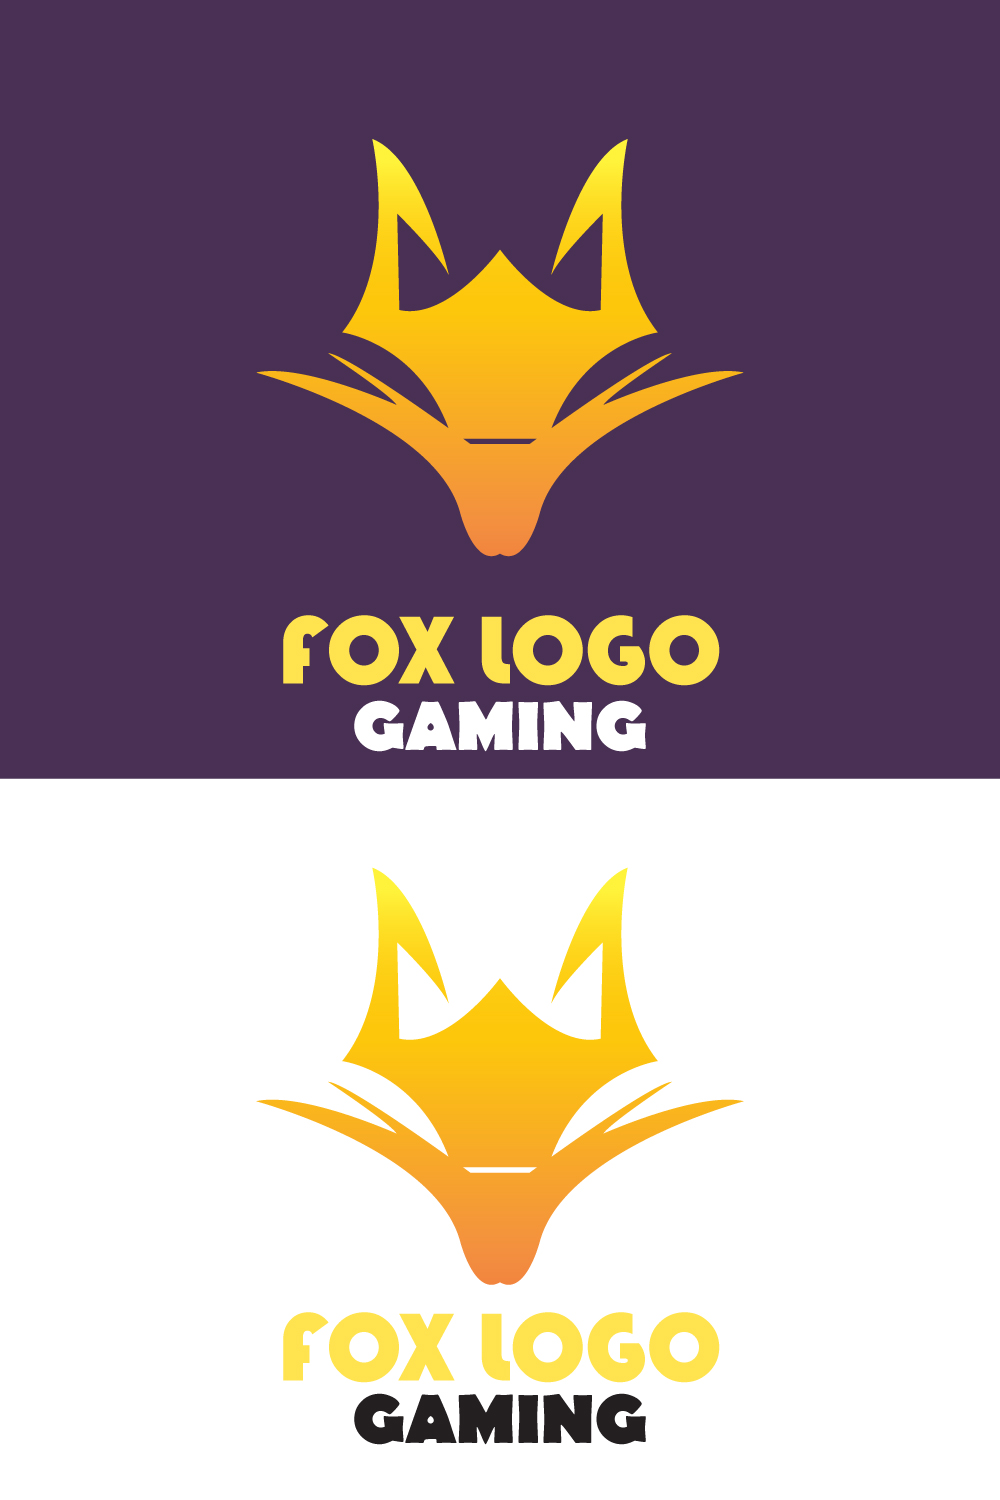 fox logo pinterest preview image.